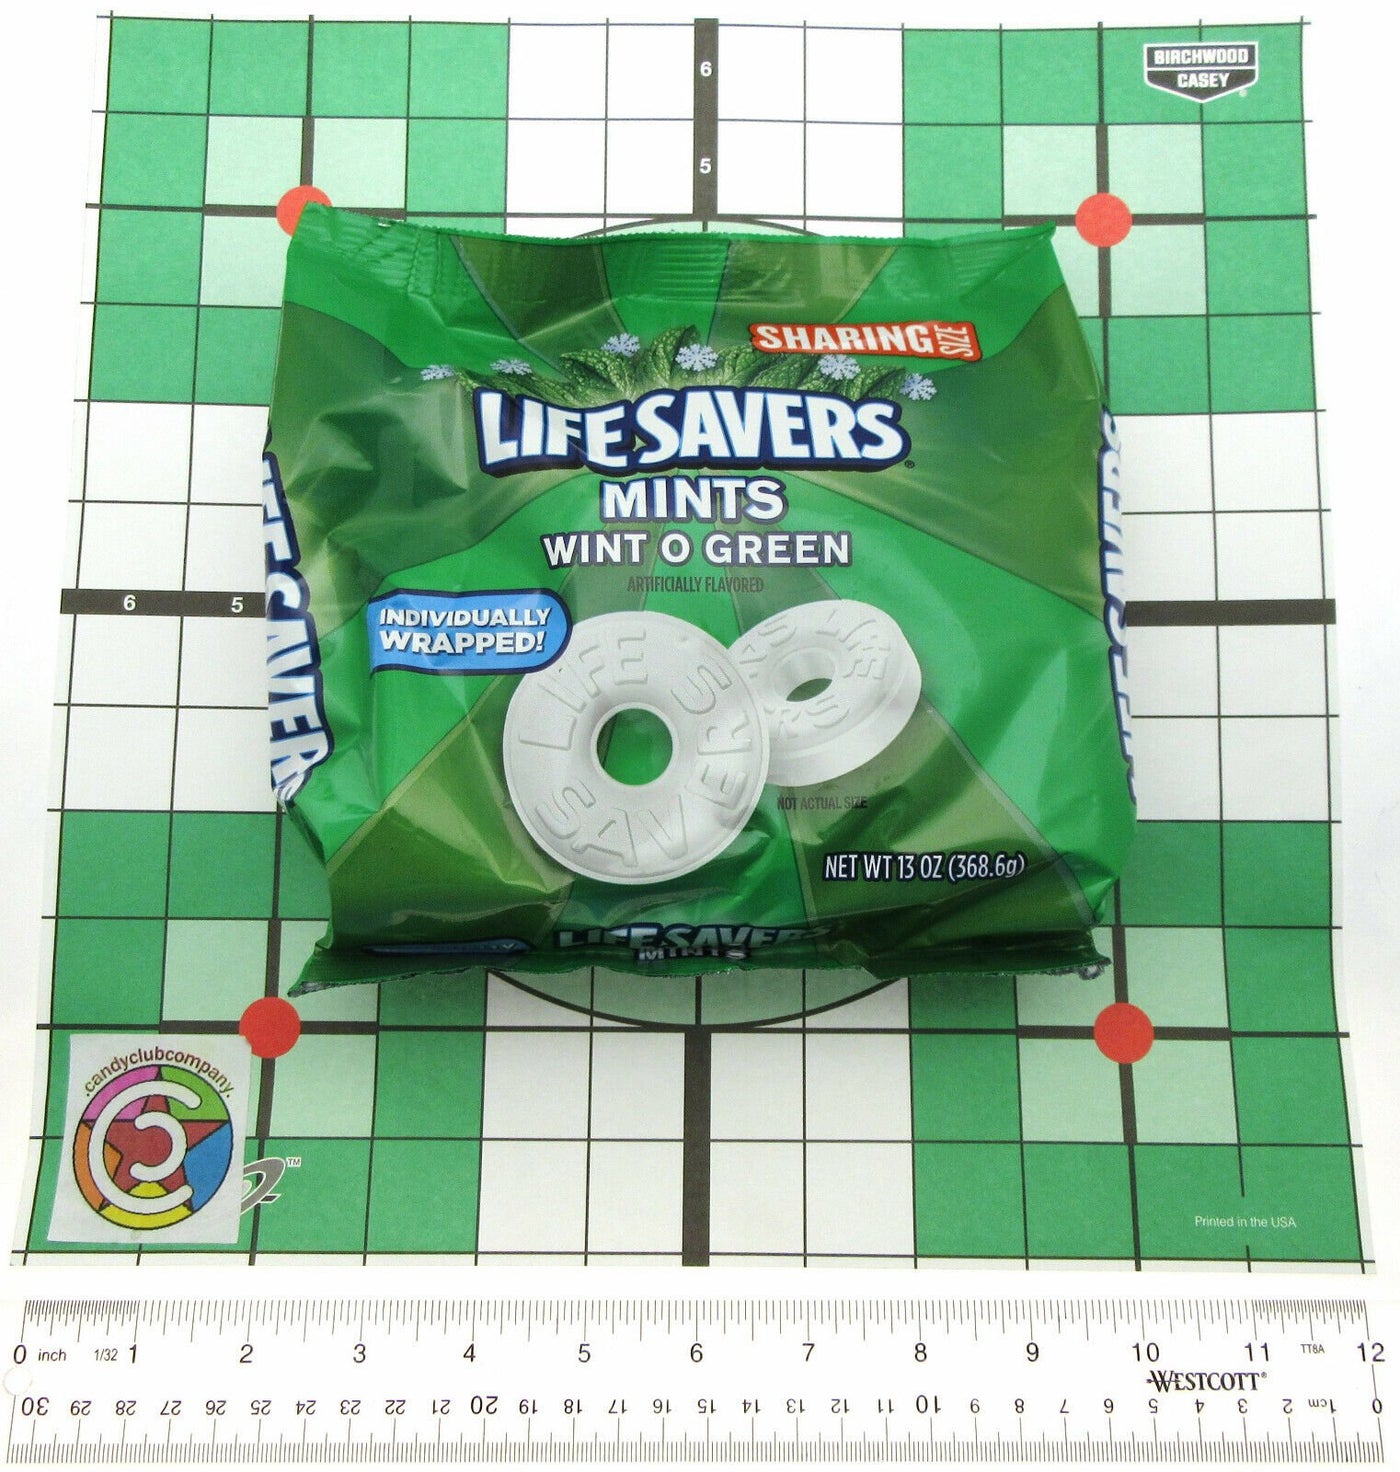 Lifesavers ~ Wint O Green Mint ~ Individually wrapped Hard candy ~ 13oz Bag